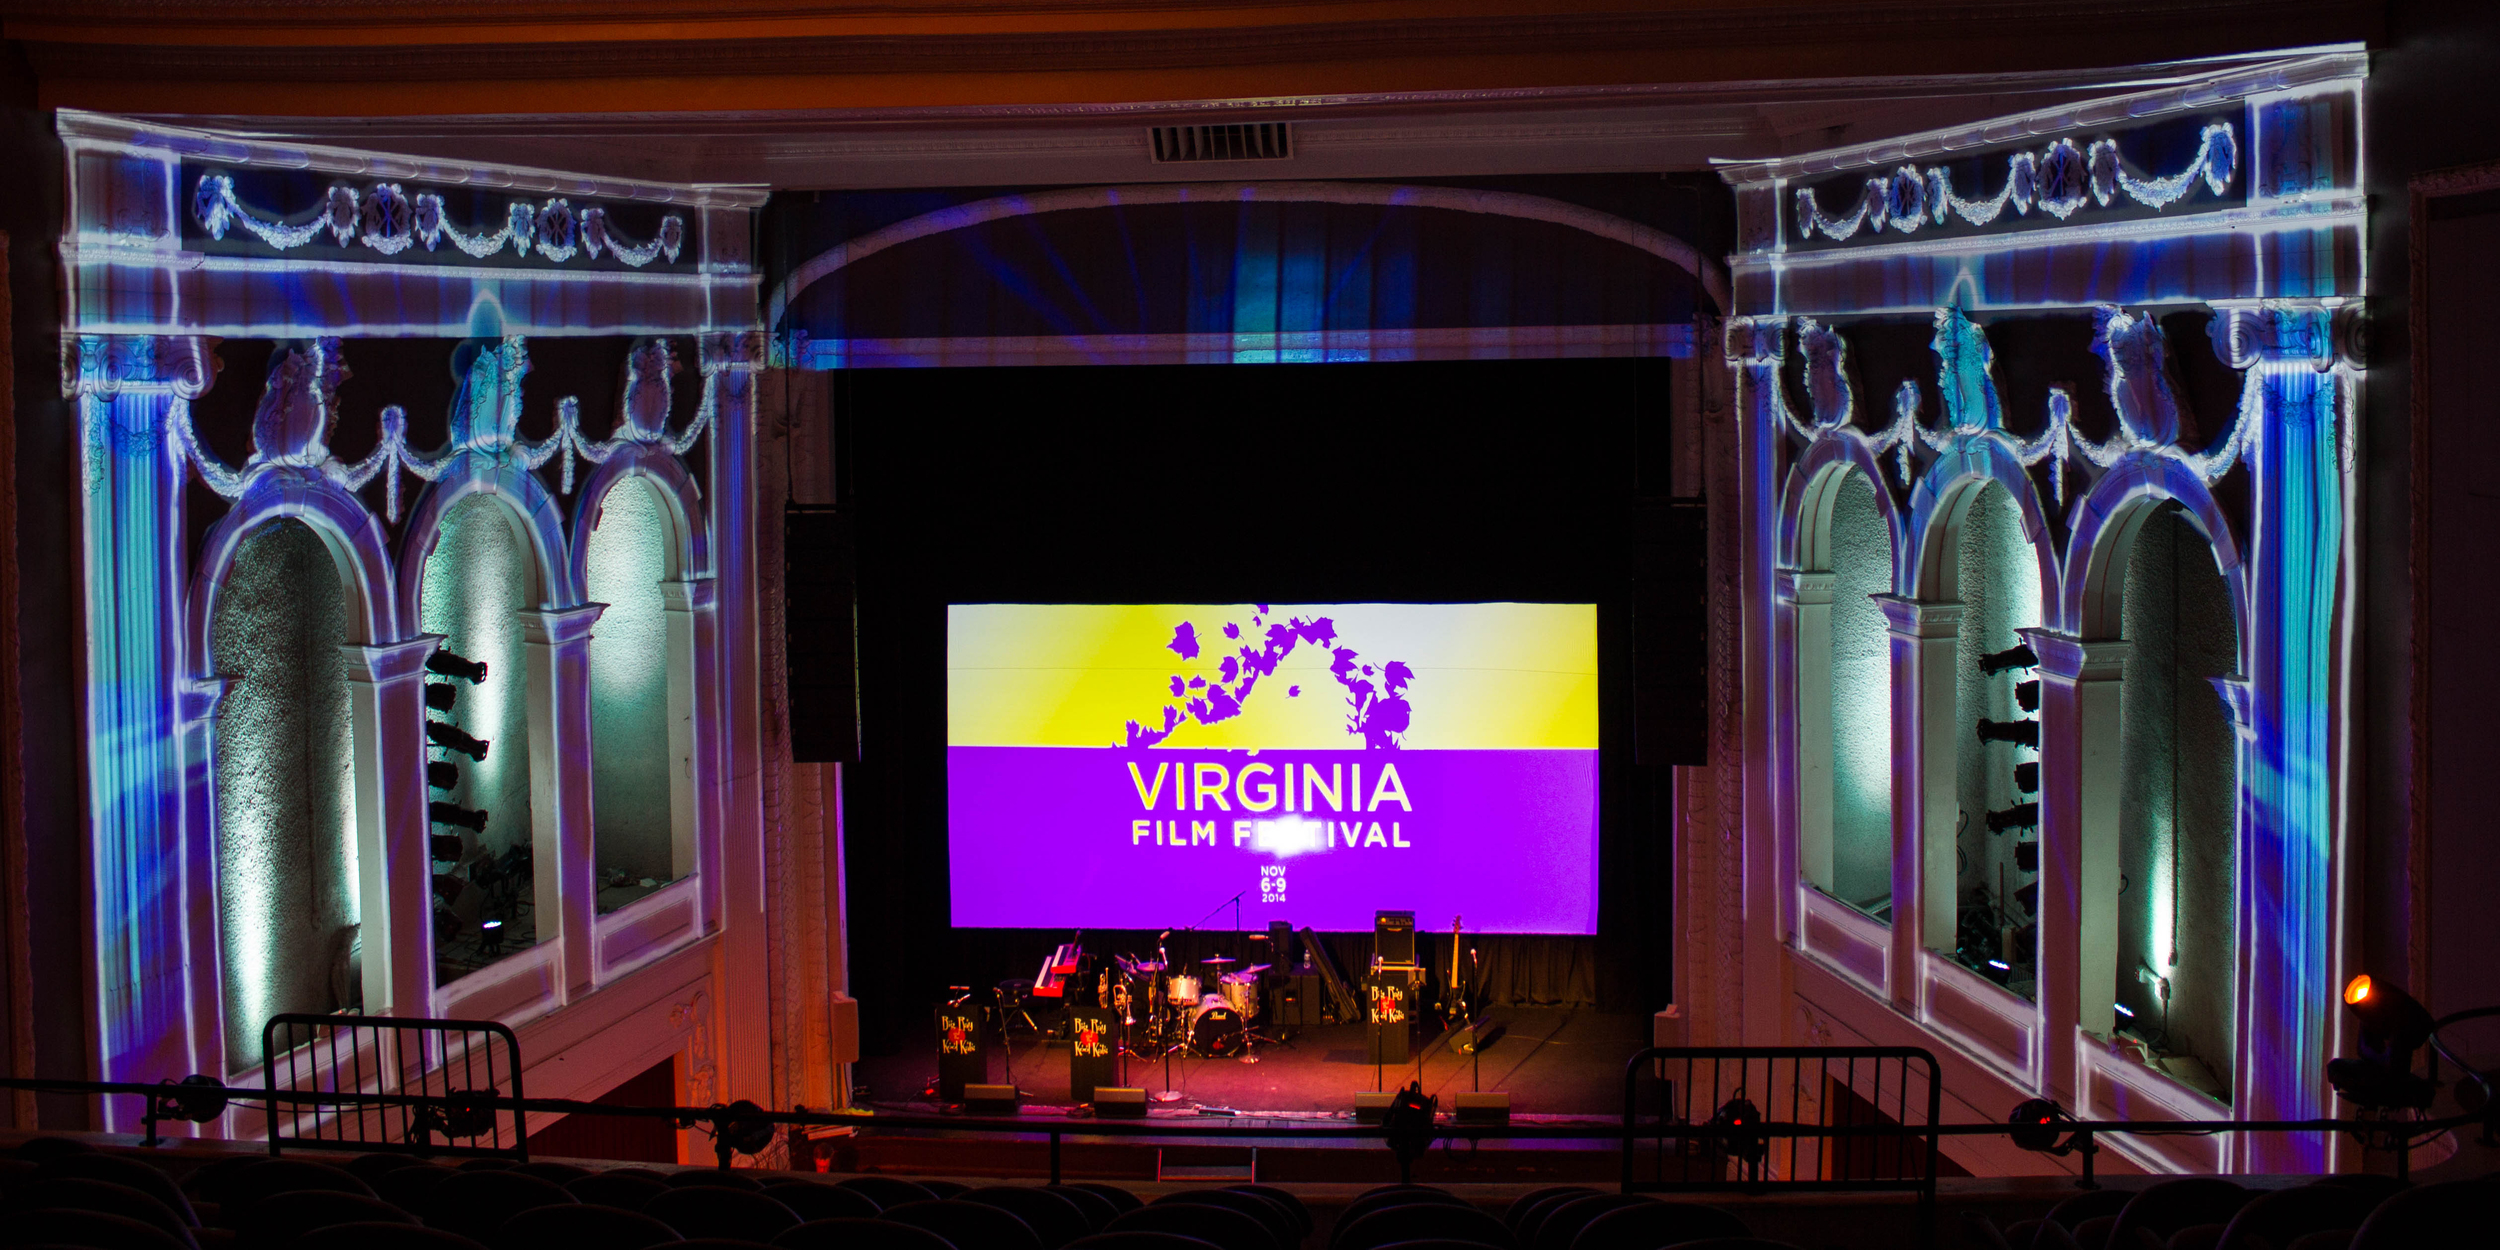 Virginia Film Festival - Rental and Staging - Live Events - Festivals - The AV Company